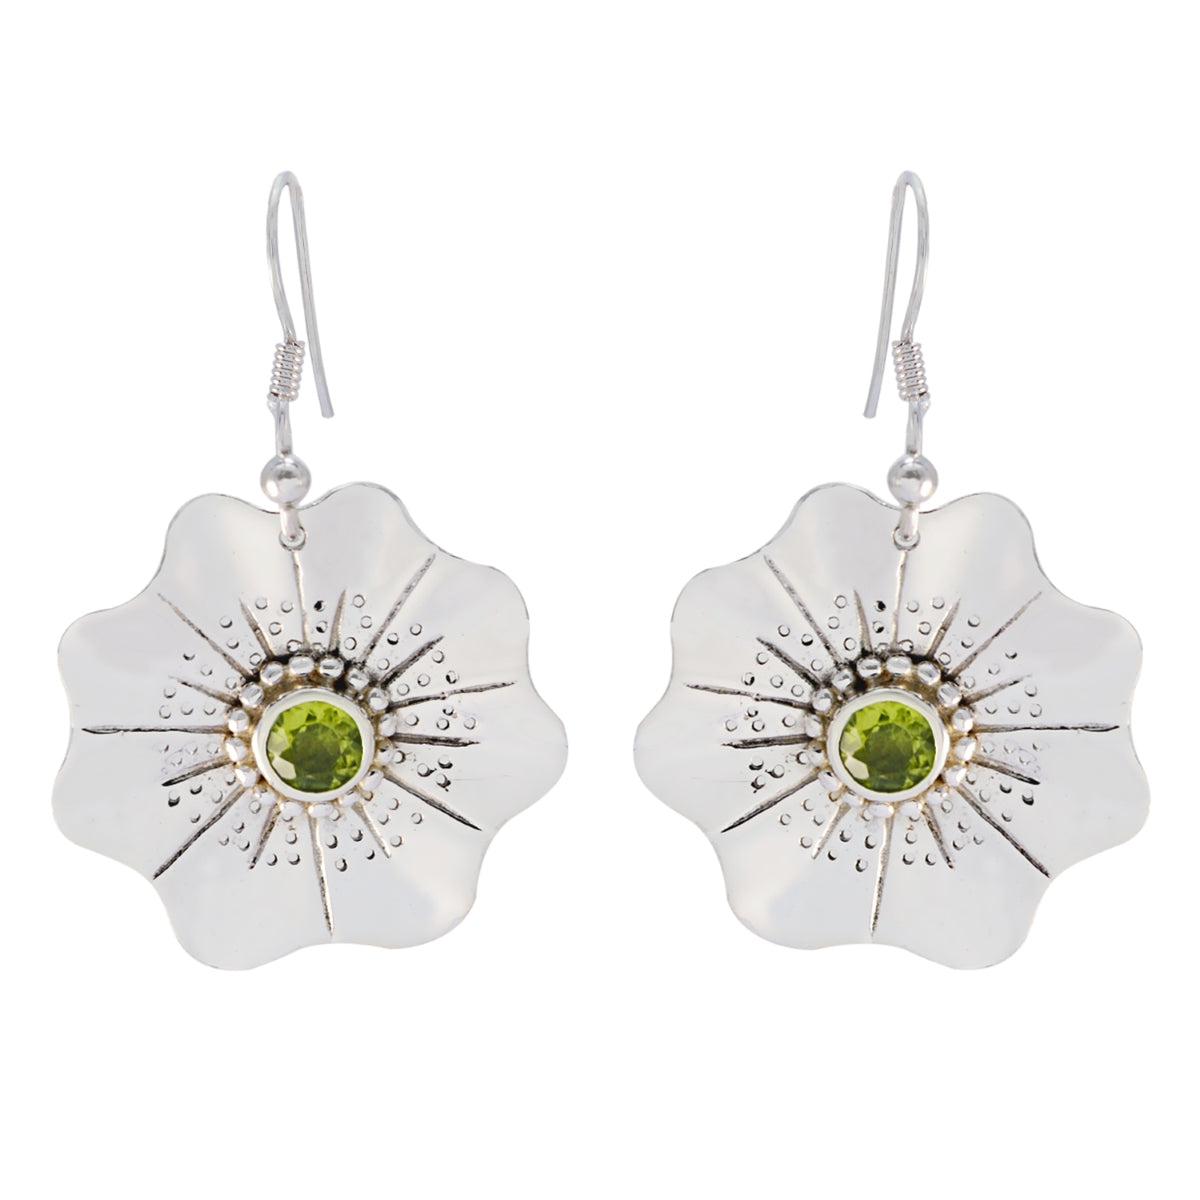 Riyo Good Gemstones round Faceted Green Peridot Silver Earrings gift for christmas